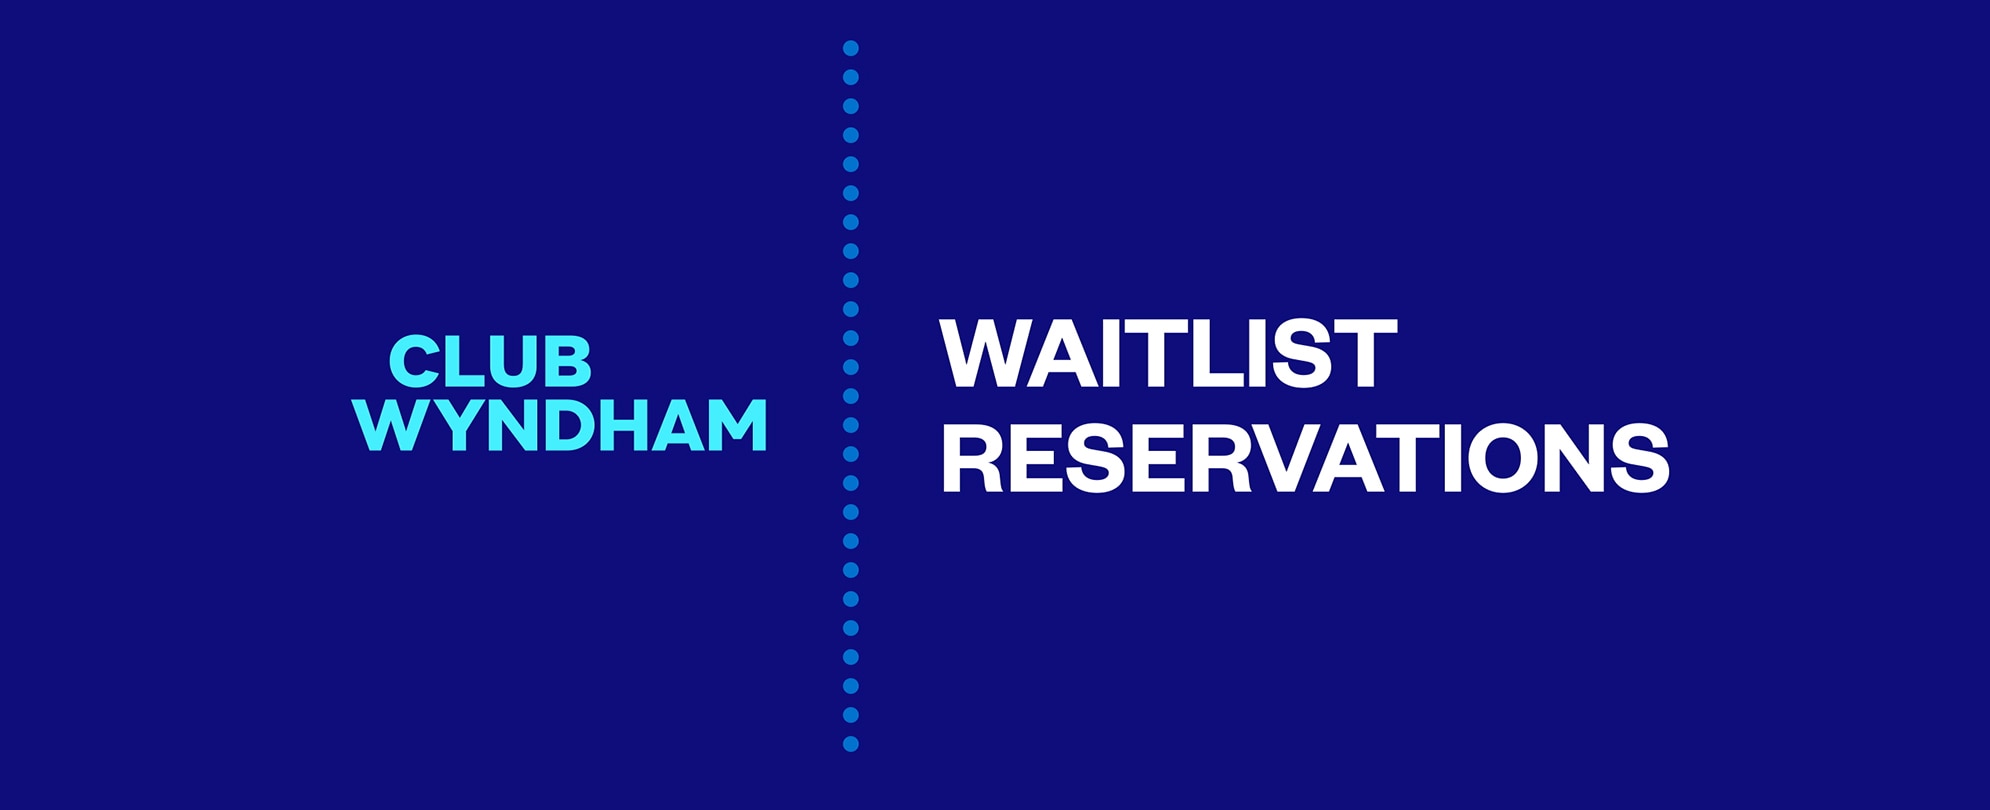 Club Wyndham waitlist reservations title image.